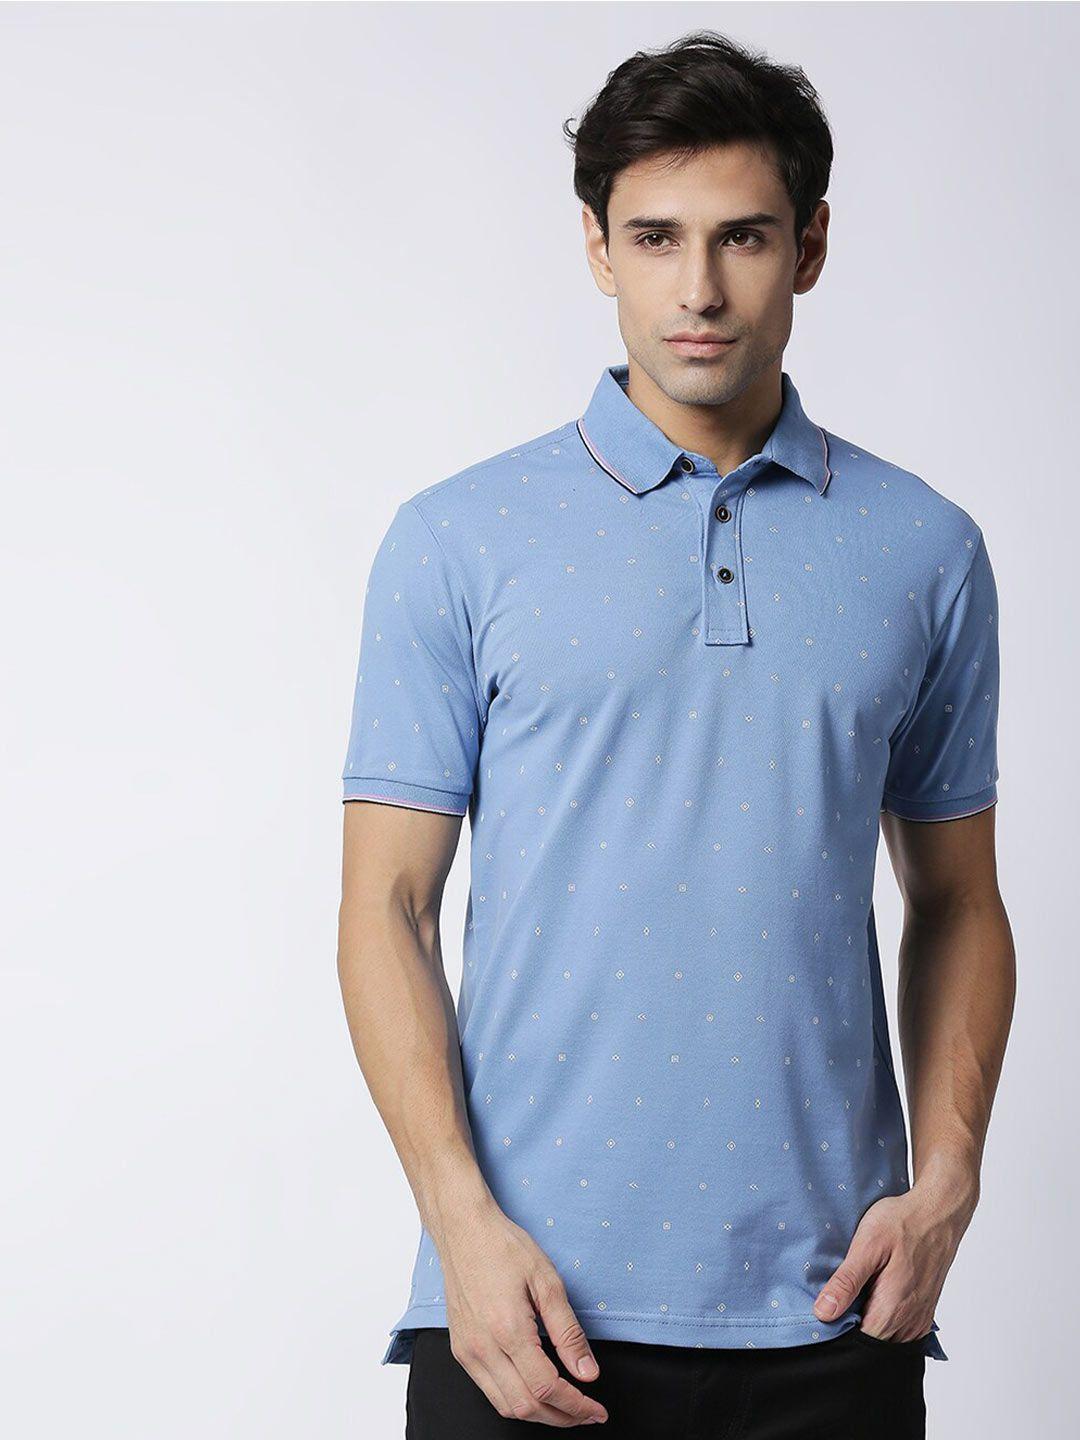 dragon hill pique geometric printed cotton slim fit polo t-shirt